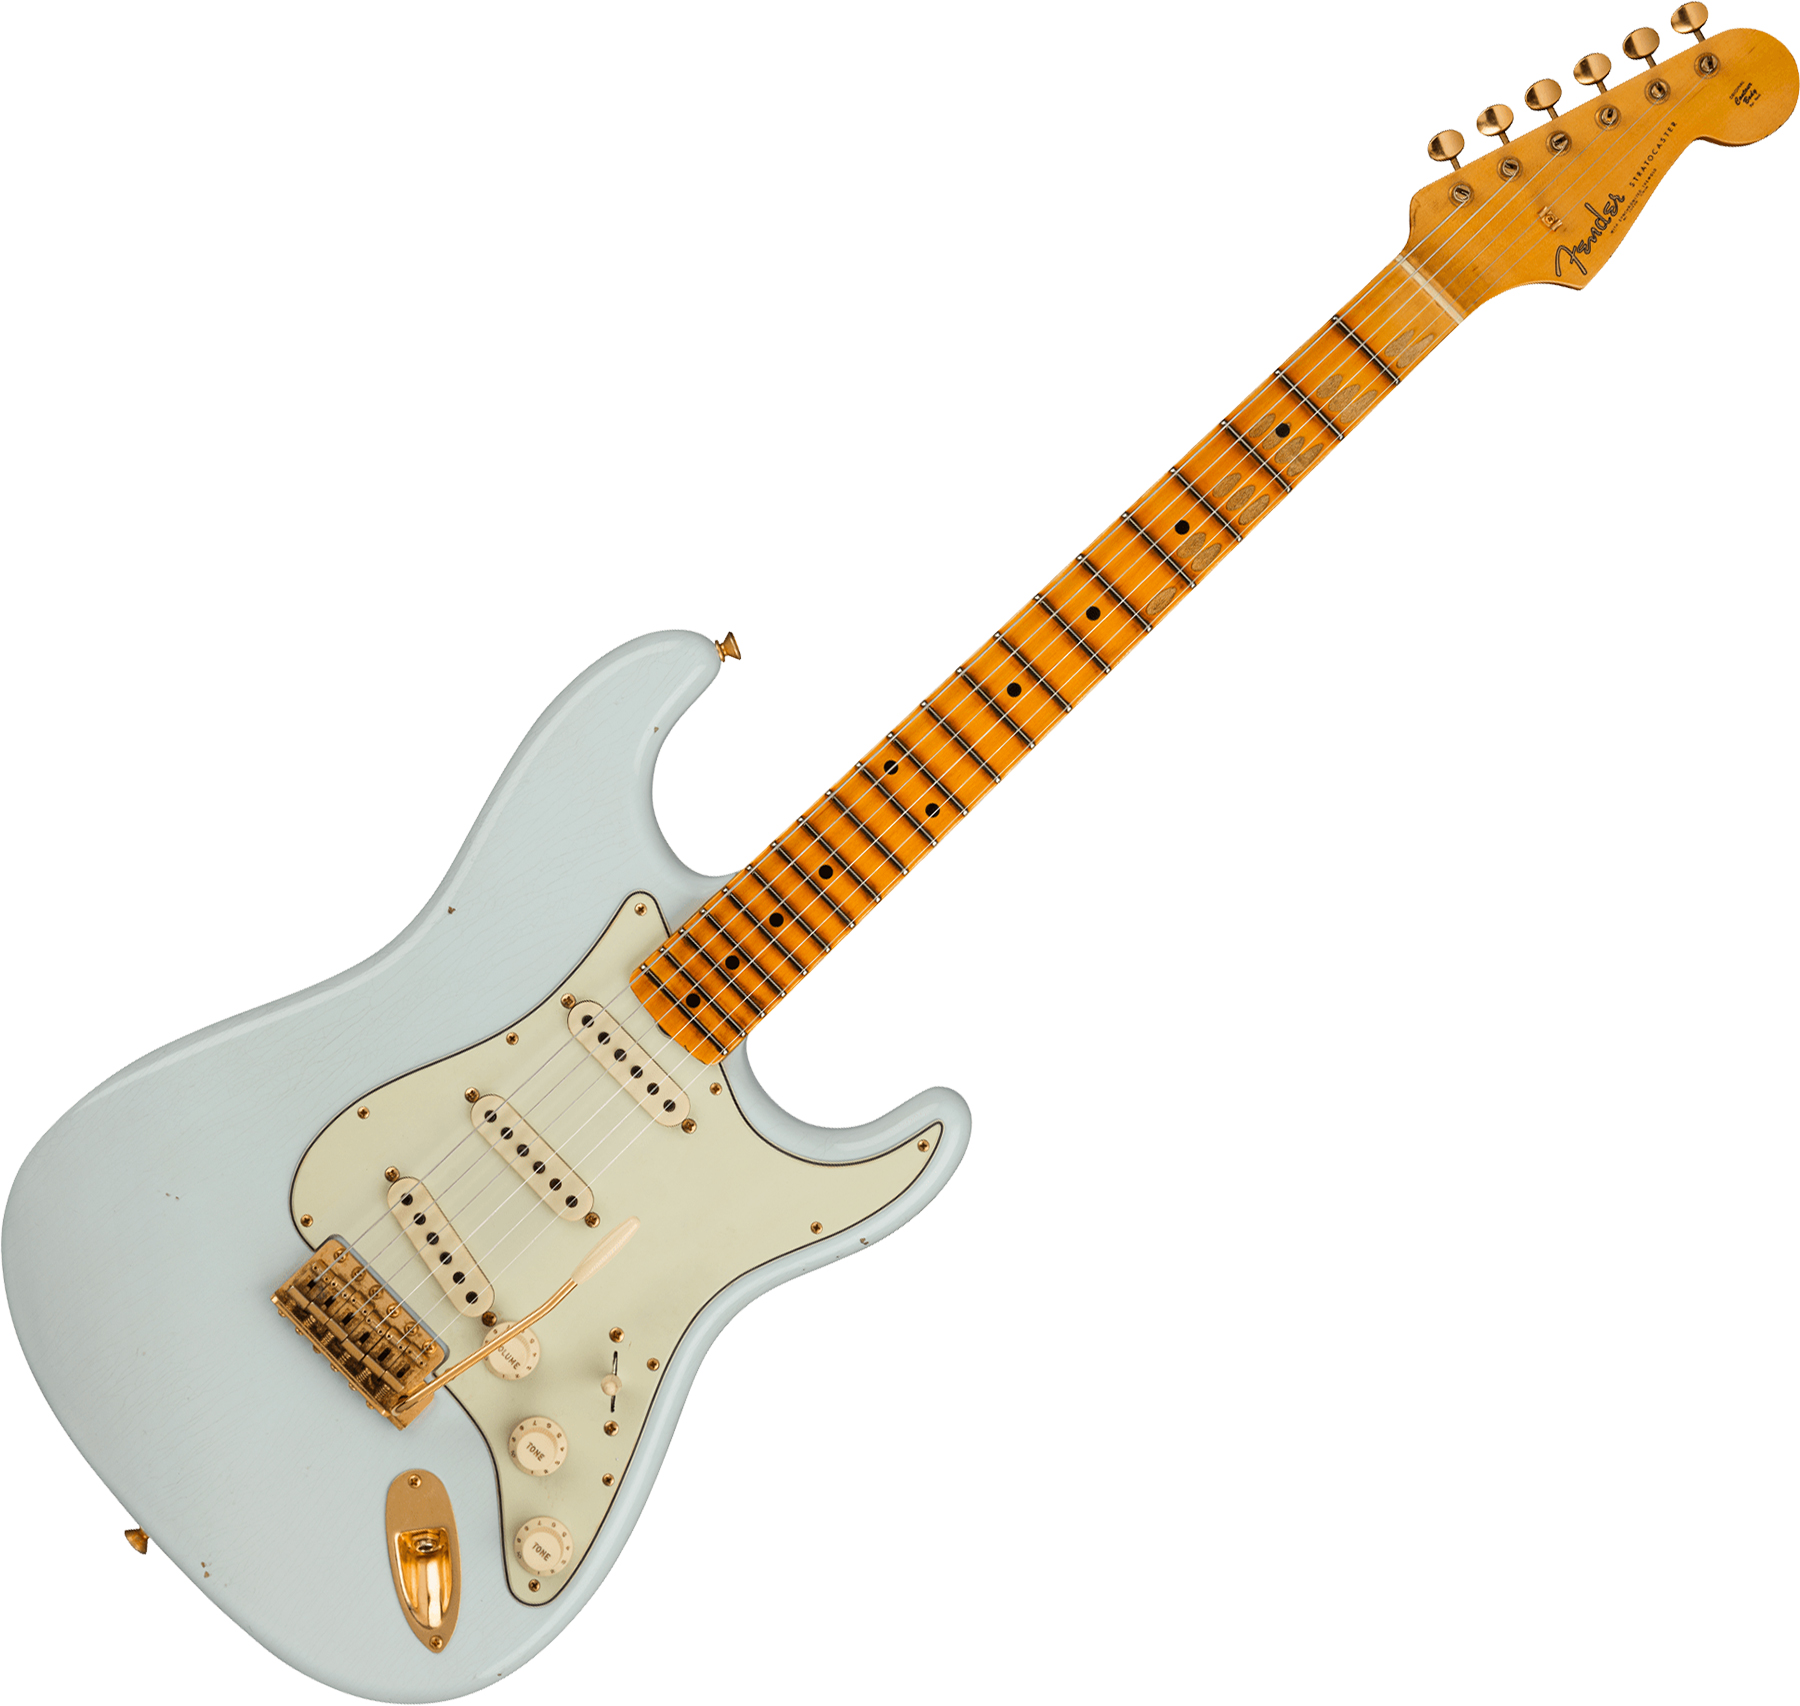 Affinity stratocaster. Электрогитара Fender 1960 Relic Stratocaster. Электрогитара Fender Stratocaster Green. Фендер стратокастер серф Грин HSS. Электрогитара Squier by Fender Stratocaster HSS.